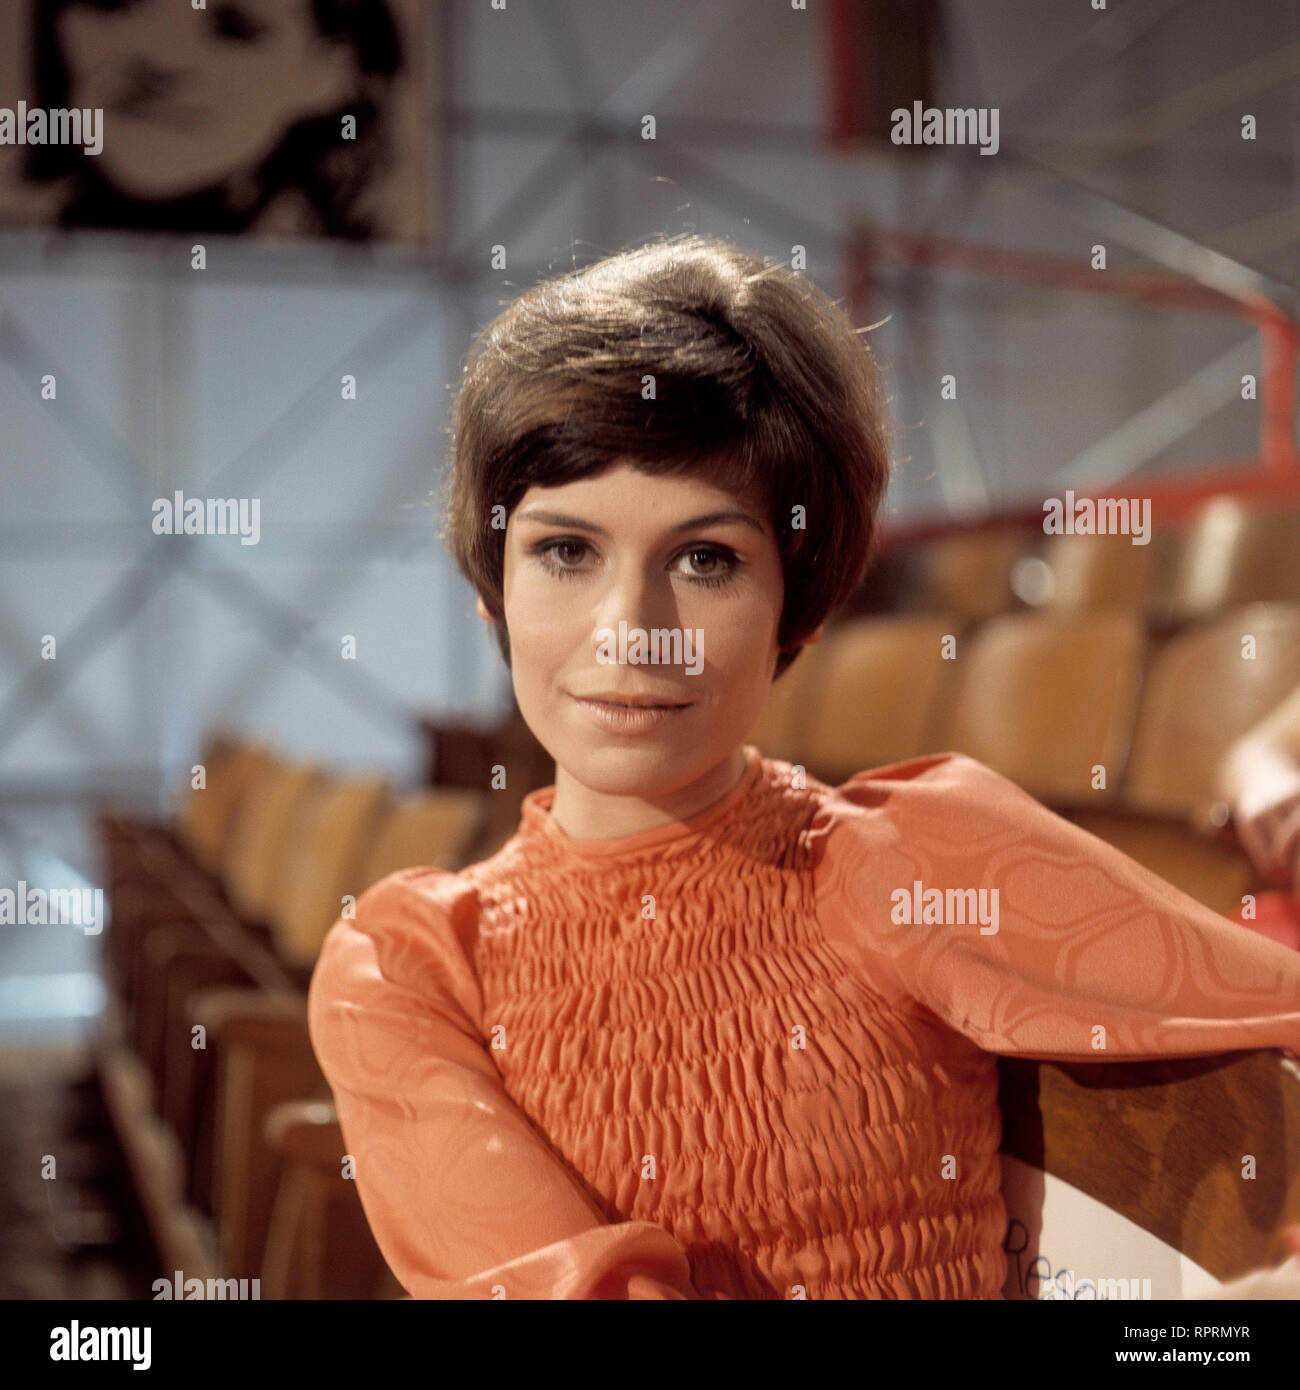 HITPARADE / MARY ROOS, 1969 Grimm214 Stock Photo - Alamy